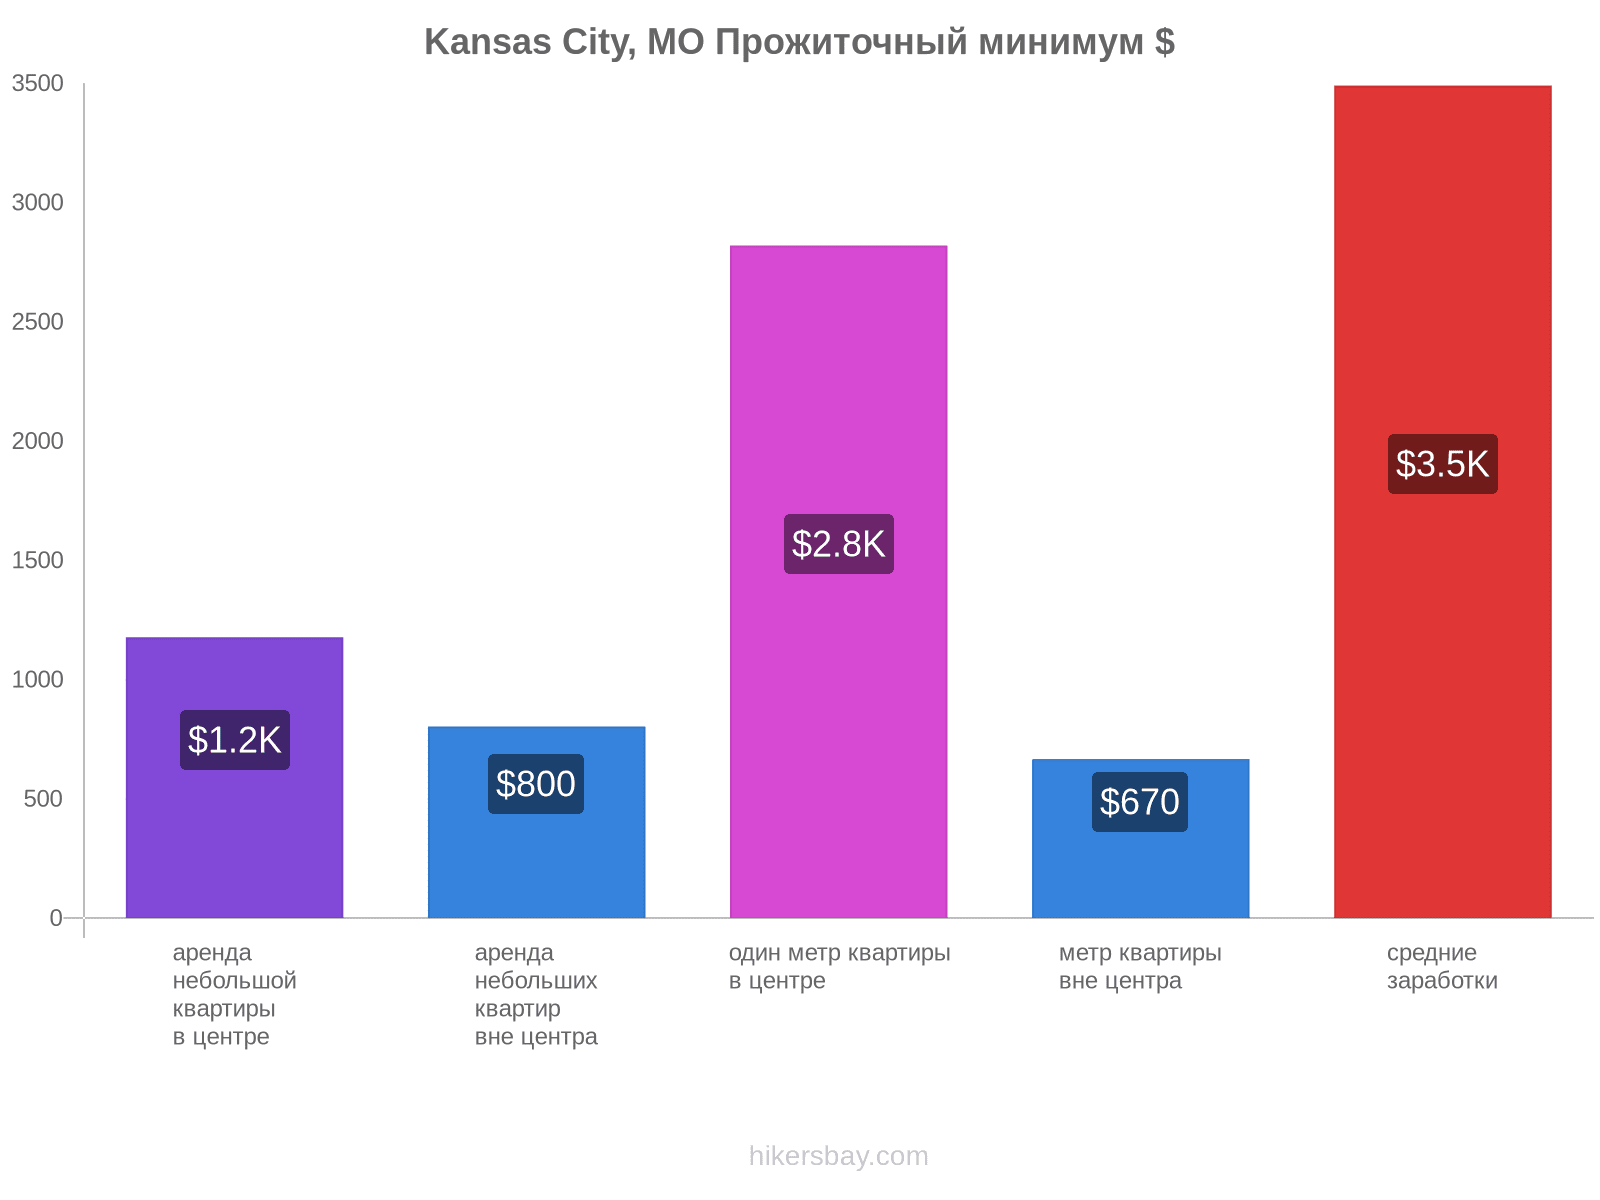 Kansas City, MO стоимость жизни hikersbay.com